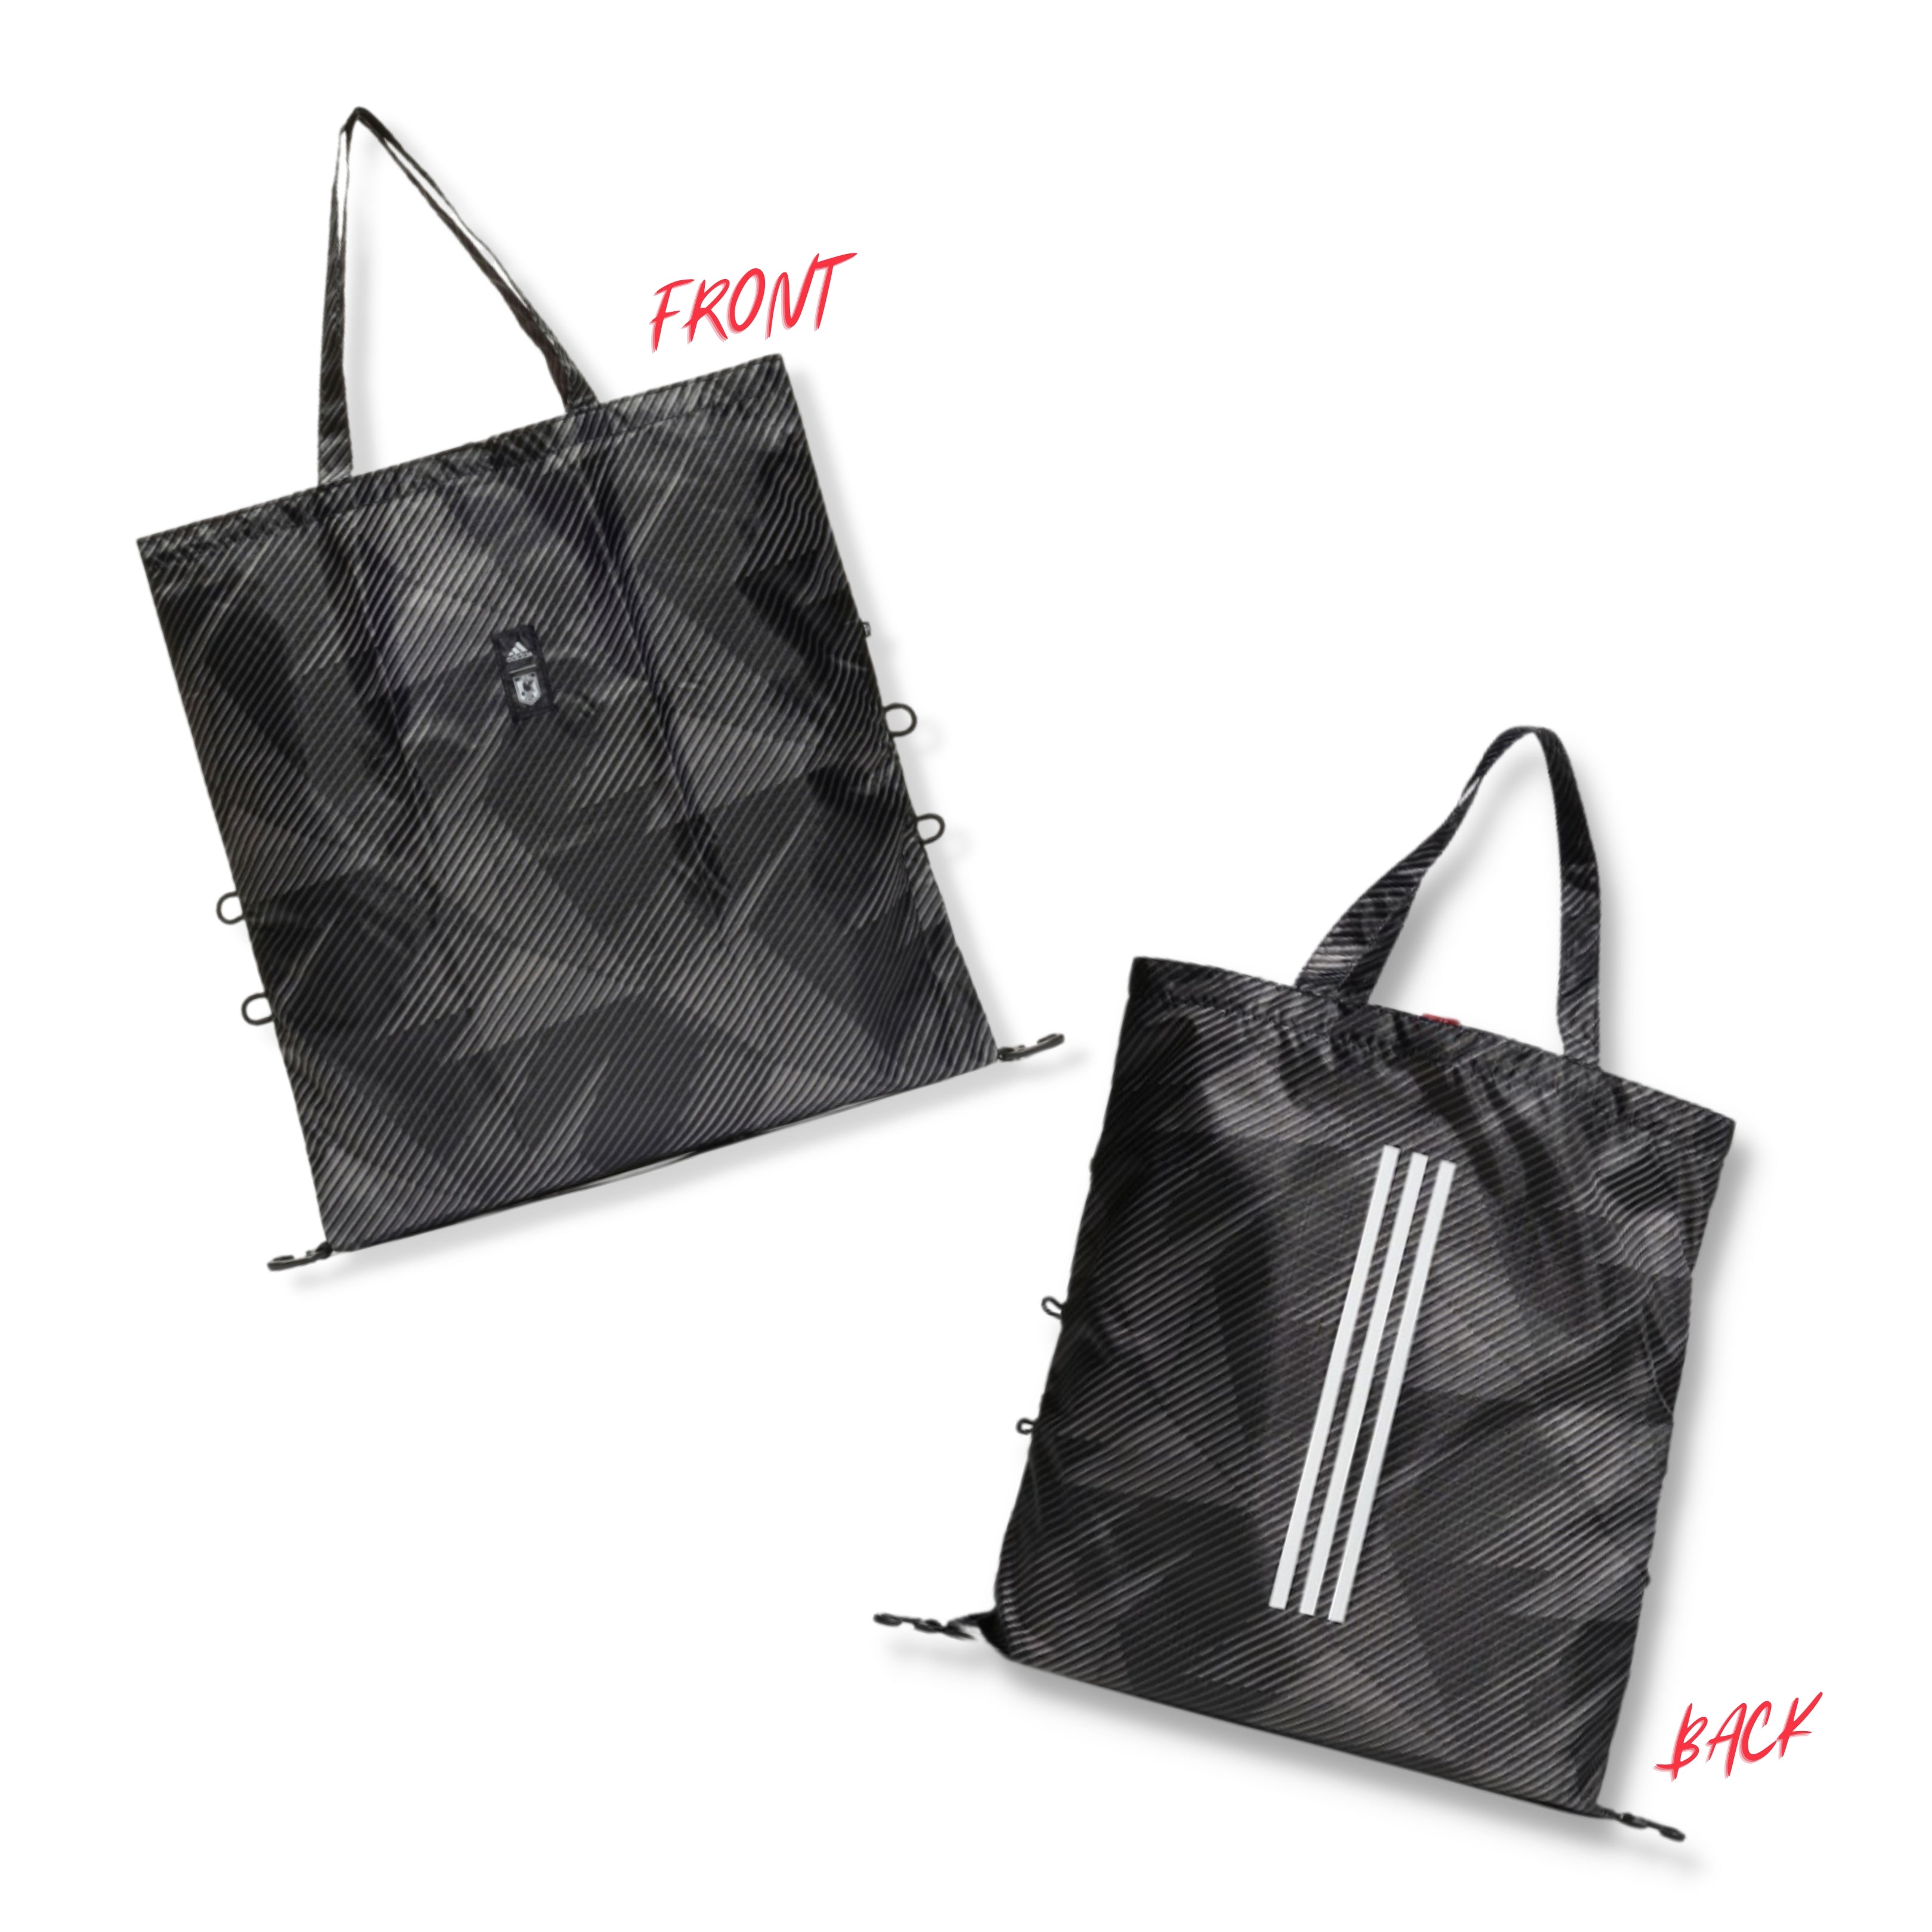 Adidas Japan National Football Team 2022 Packable Bag / Tote Bag (BW593)